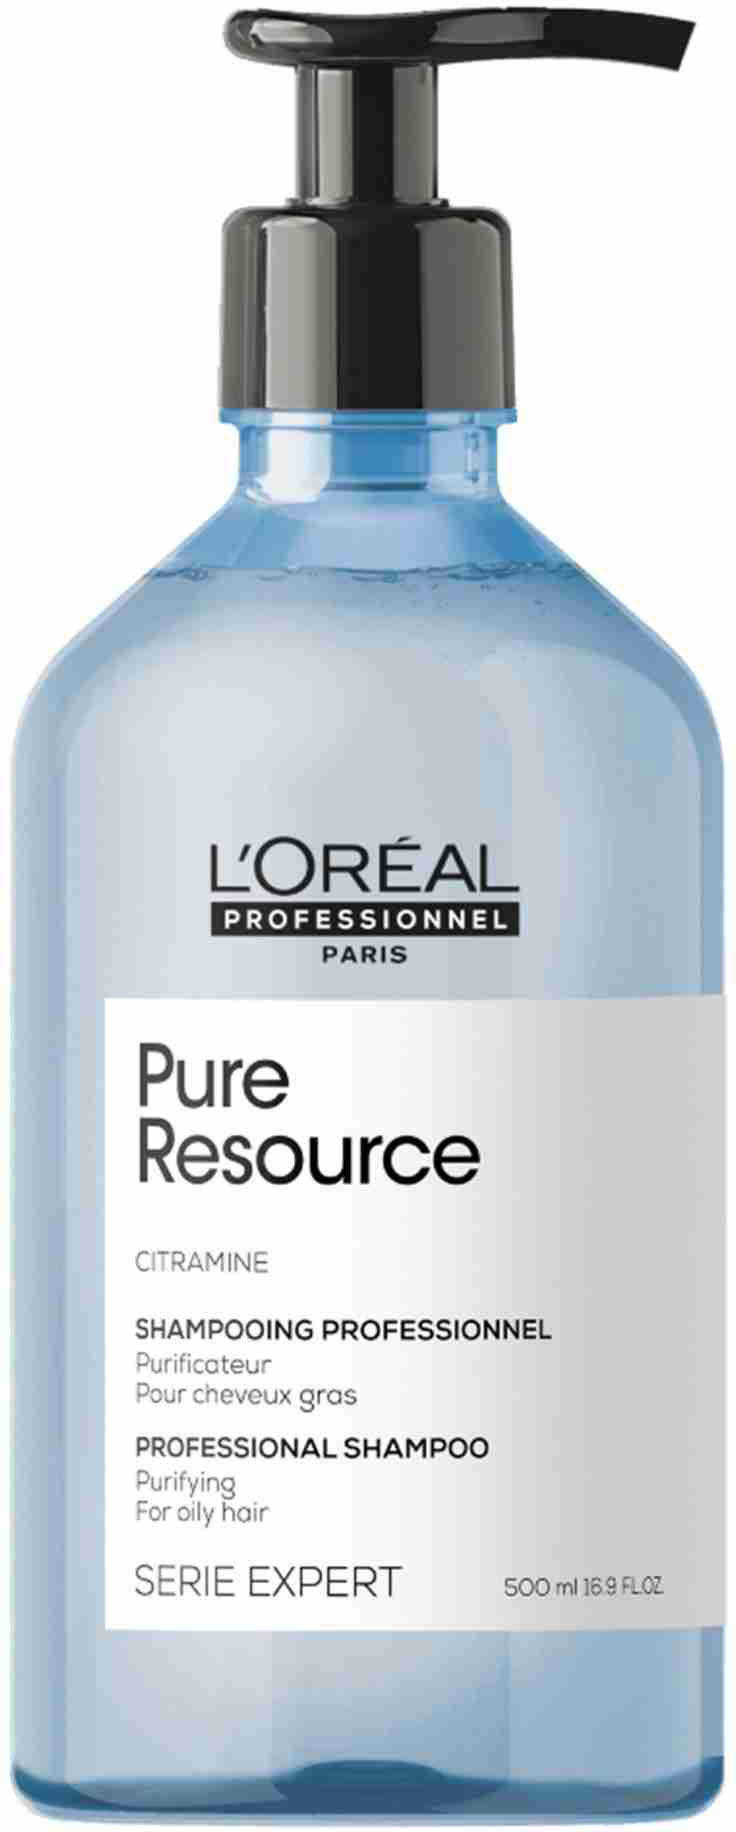 szampon pure resource opinie